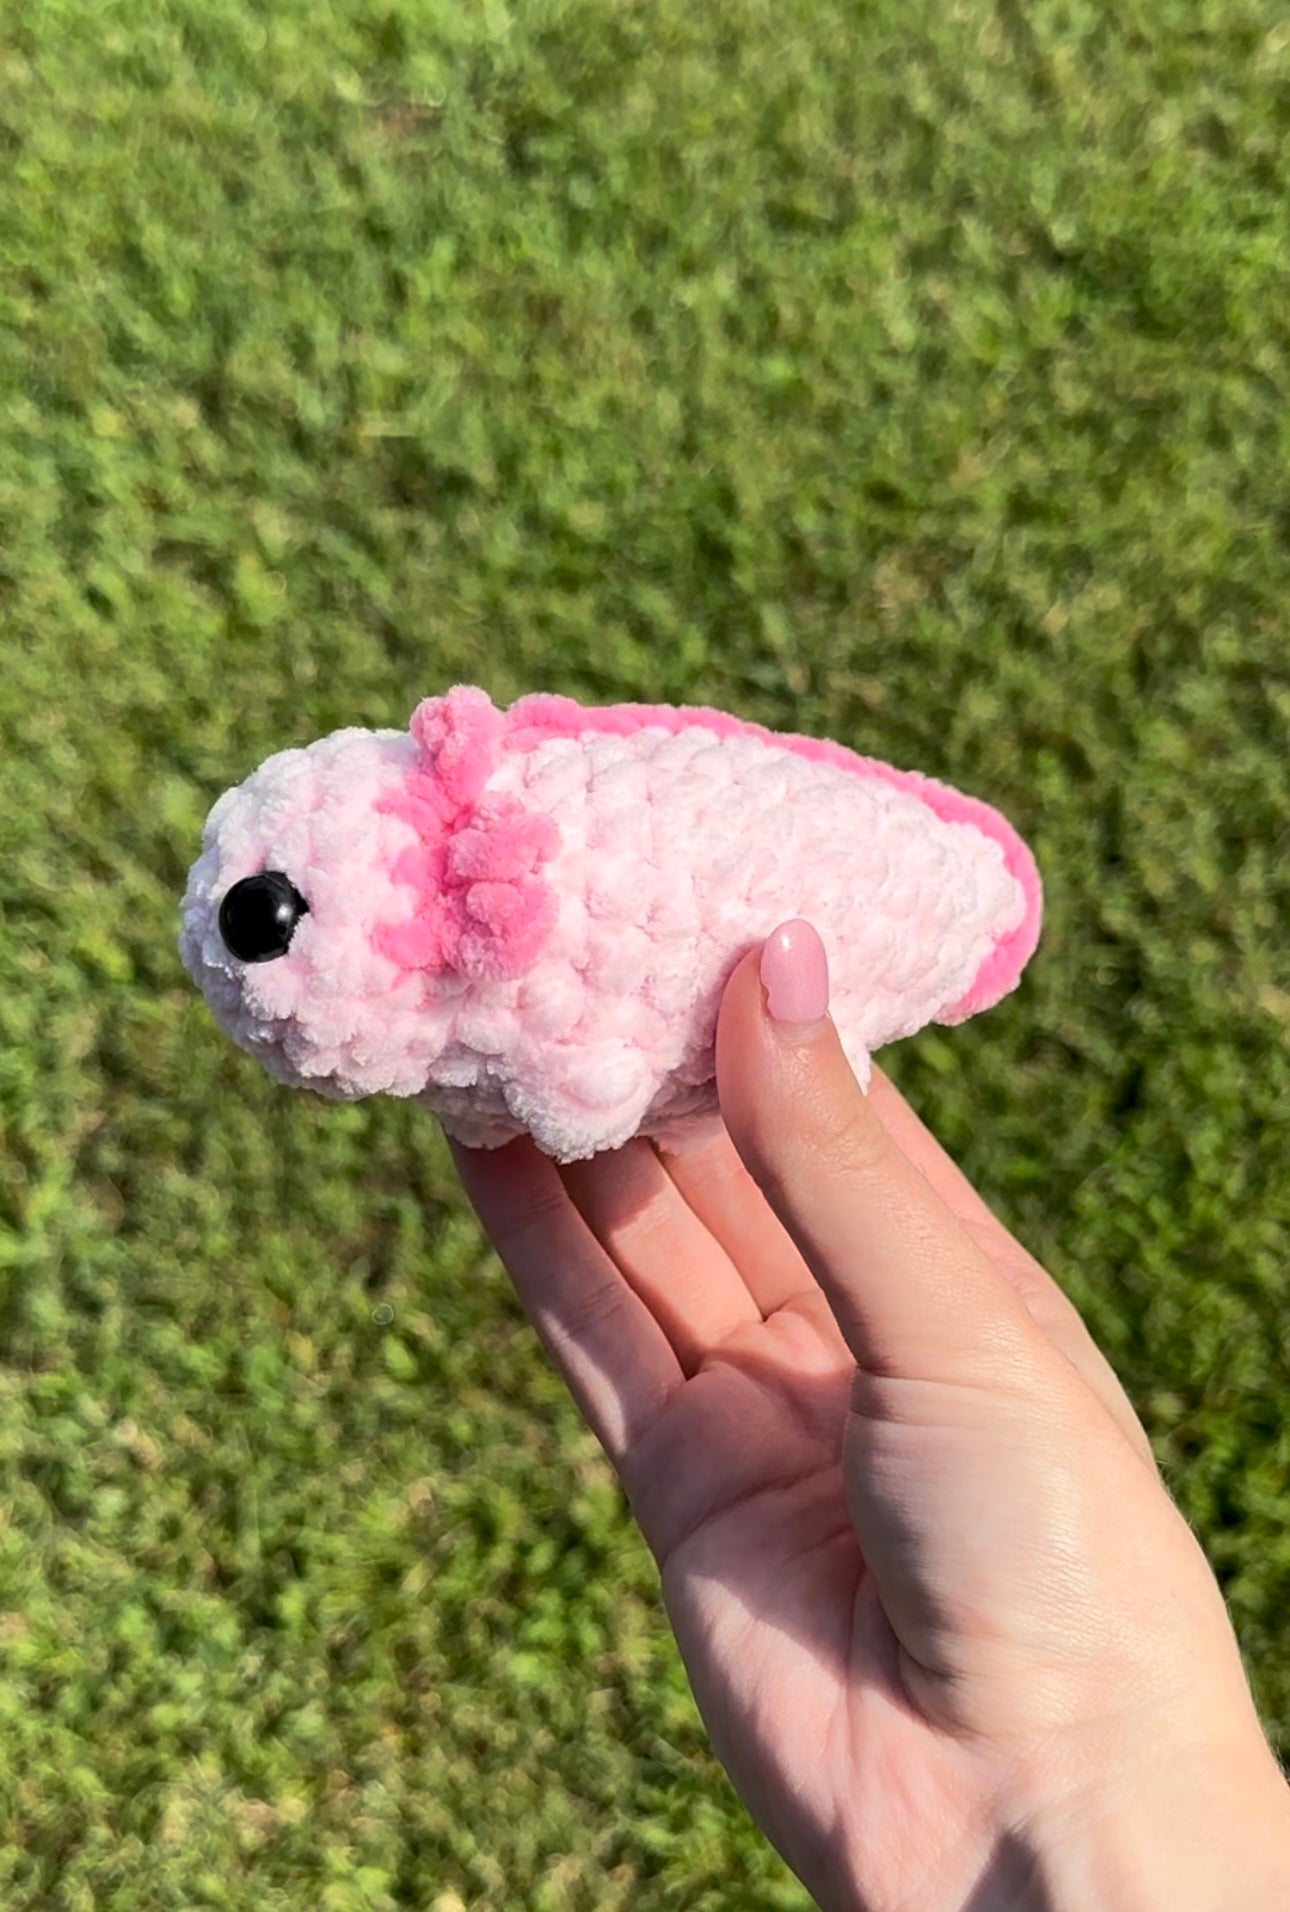 Axolotl plushies